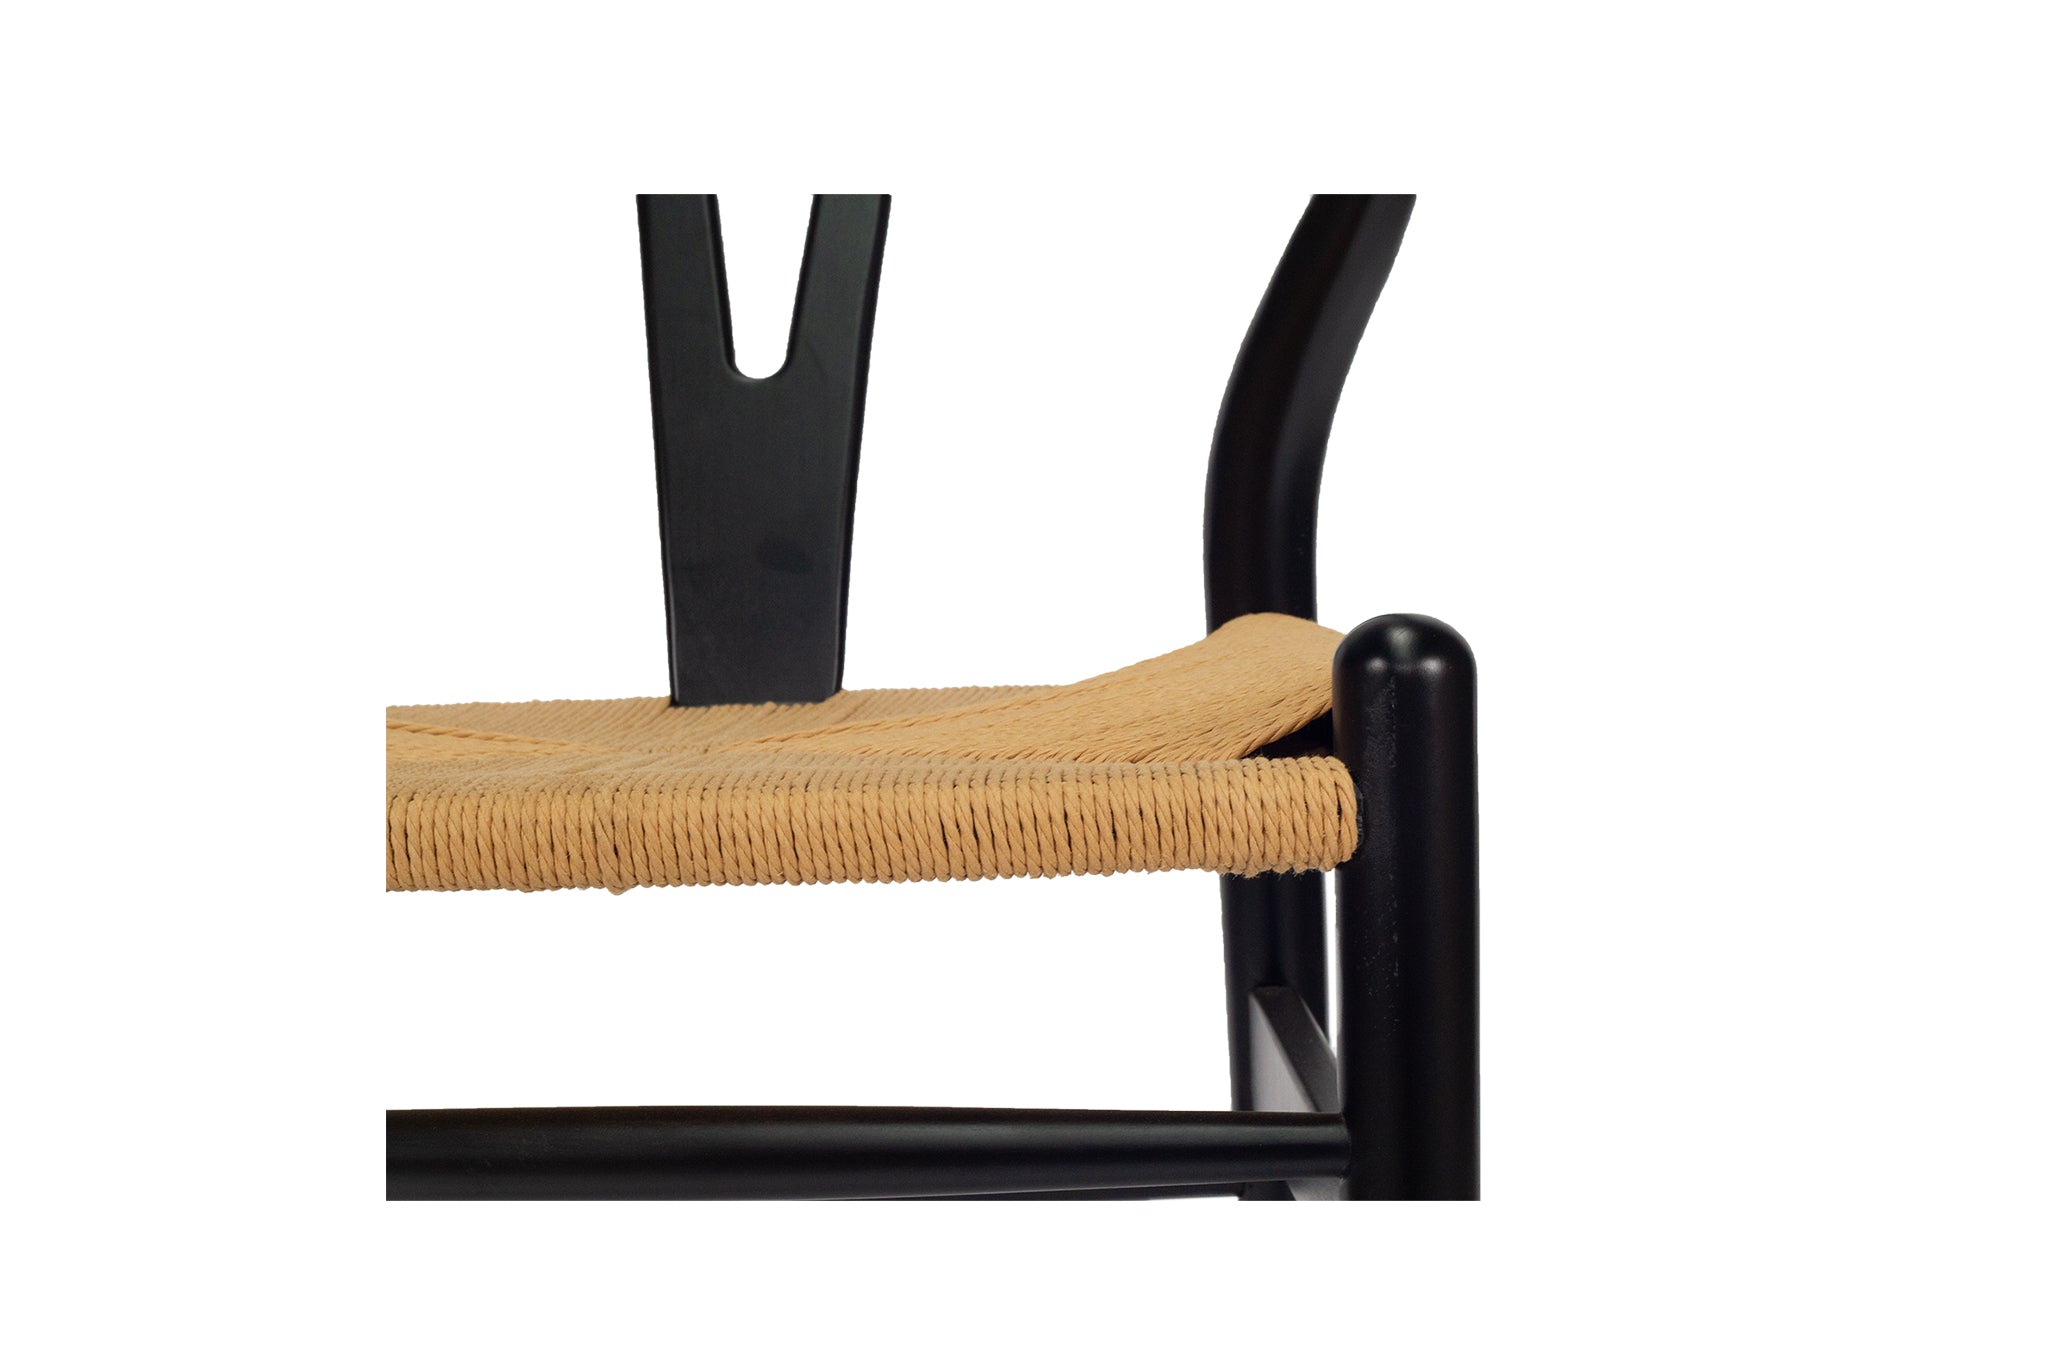 Hans Wegner Wishbone Replica Counter Stool 65cm – Black